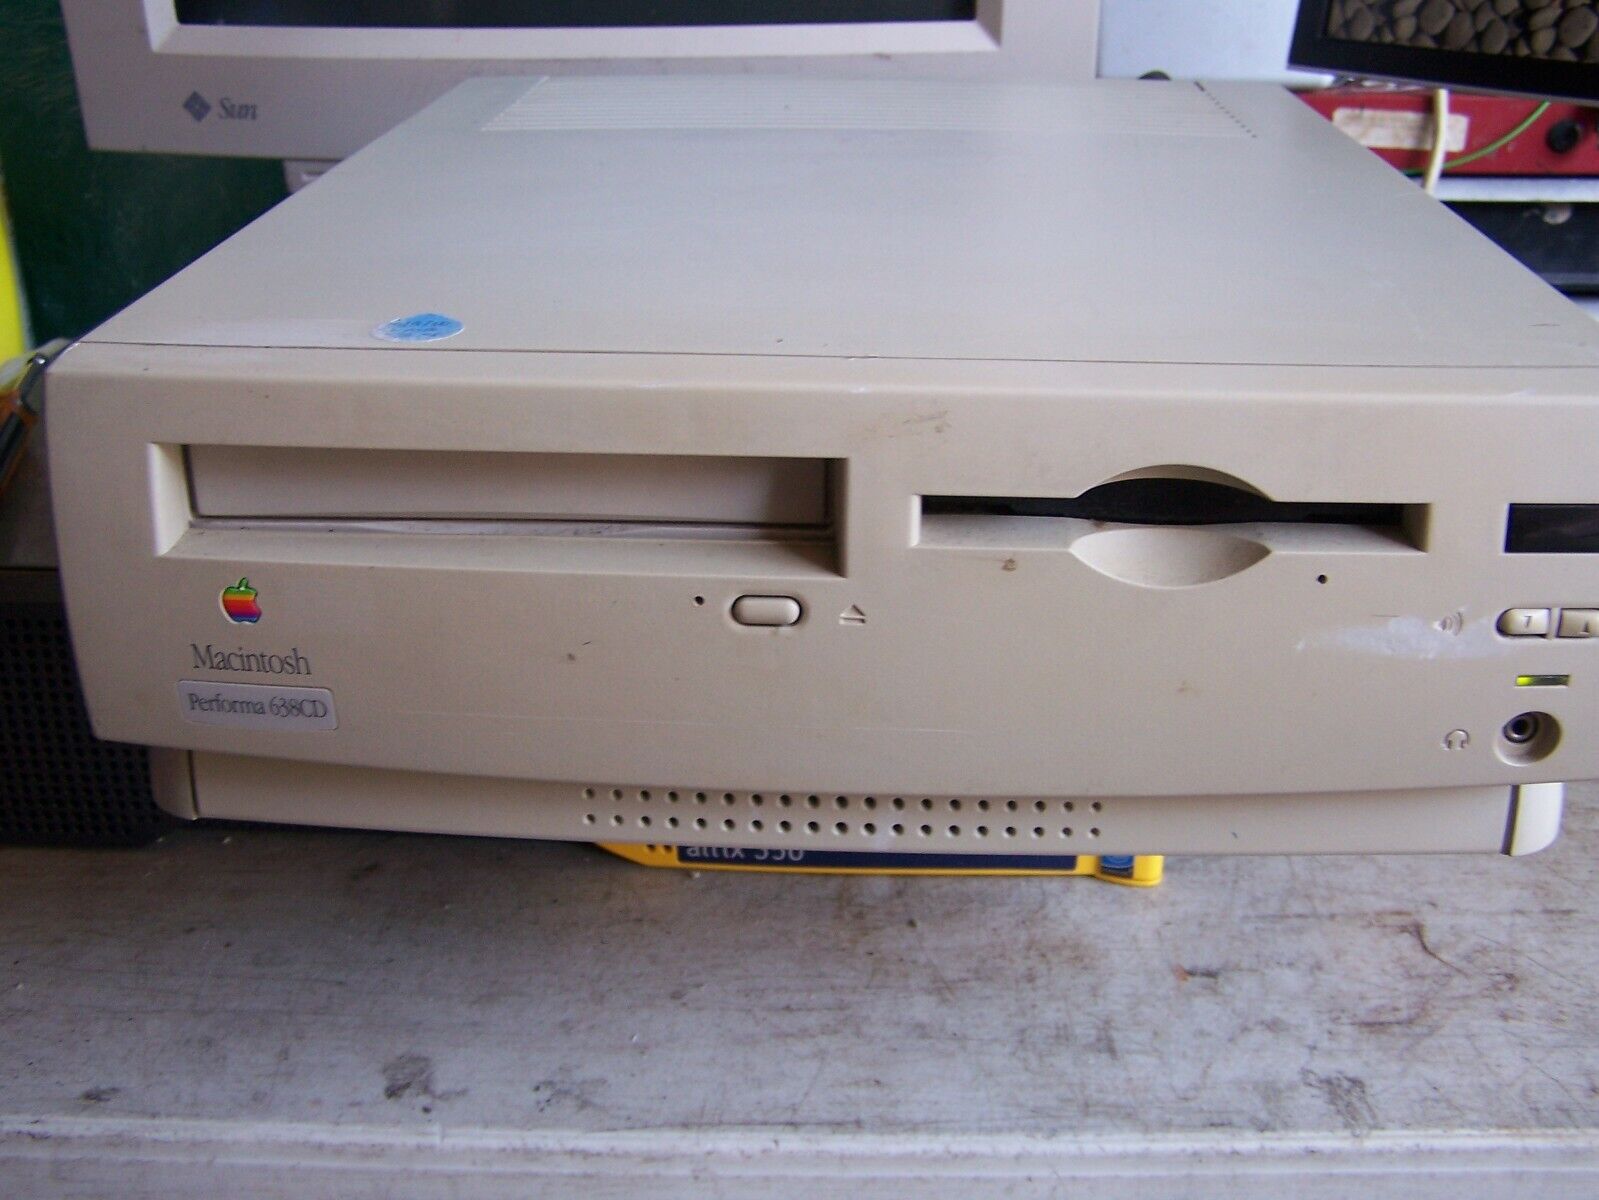 Apple Macintosh Performa 638CD M3076 12MB RAM OS 7.5.3 CD Floppy 350MB HD